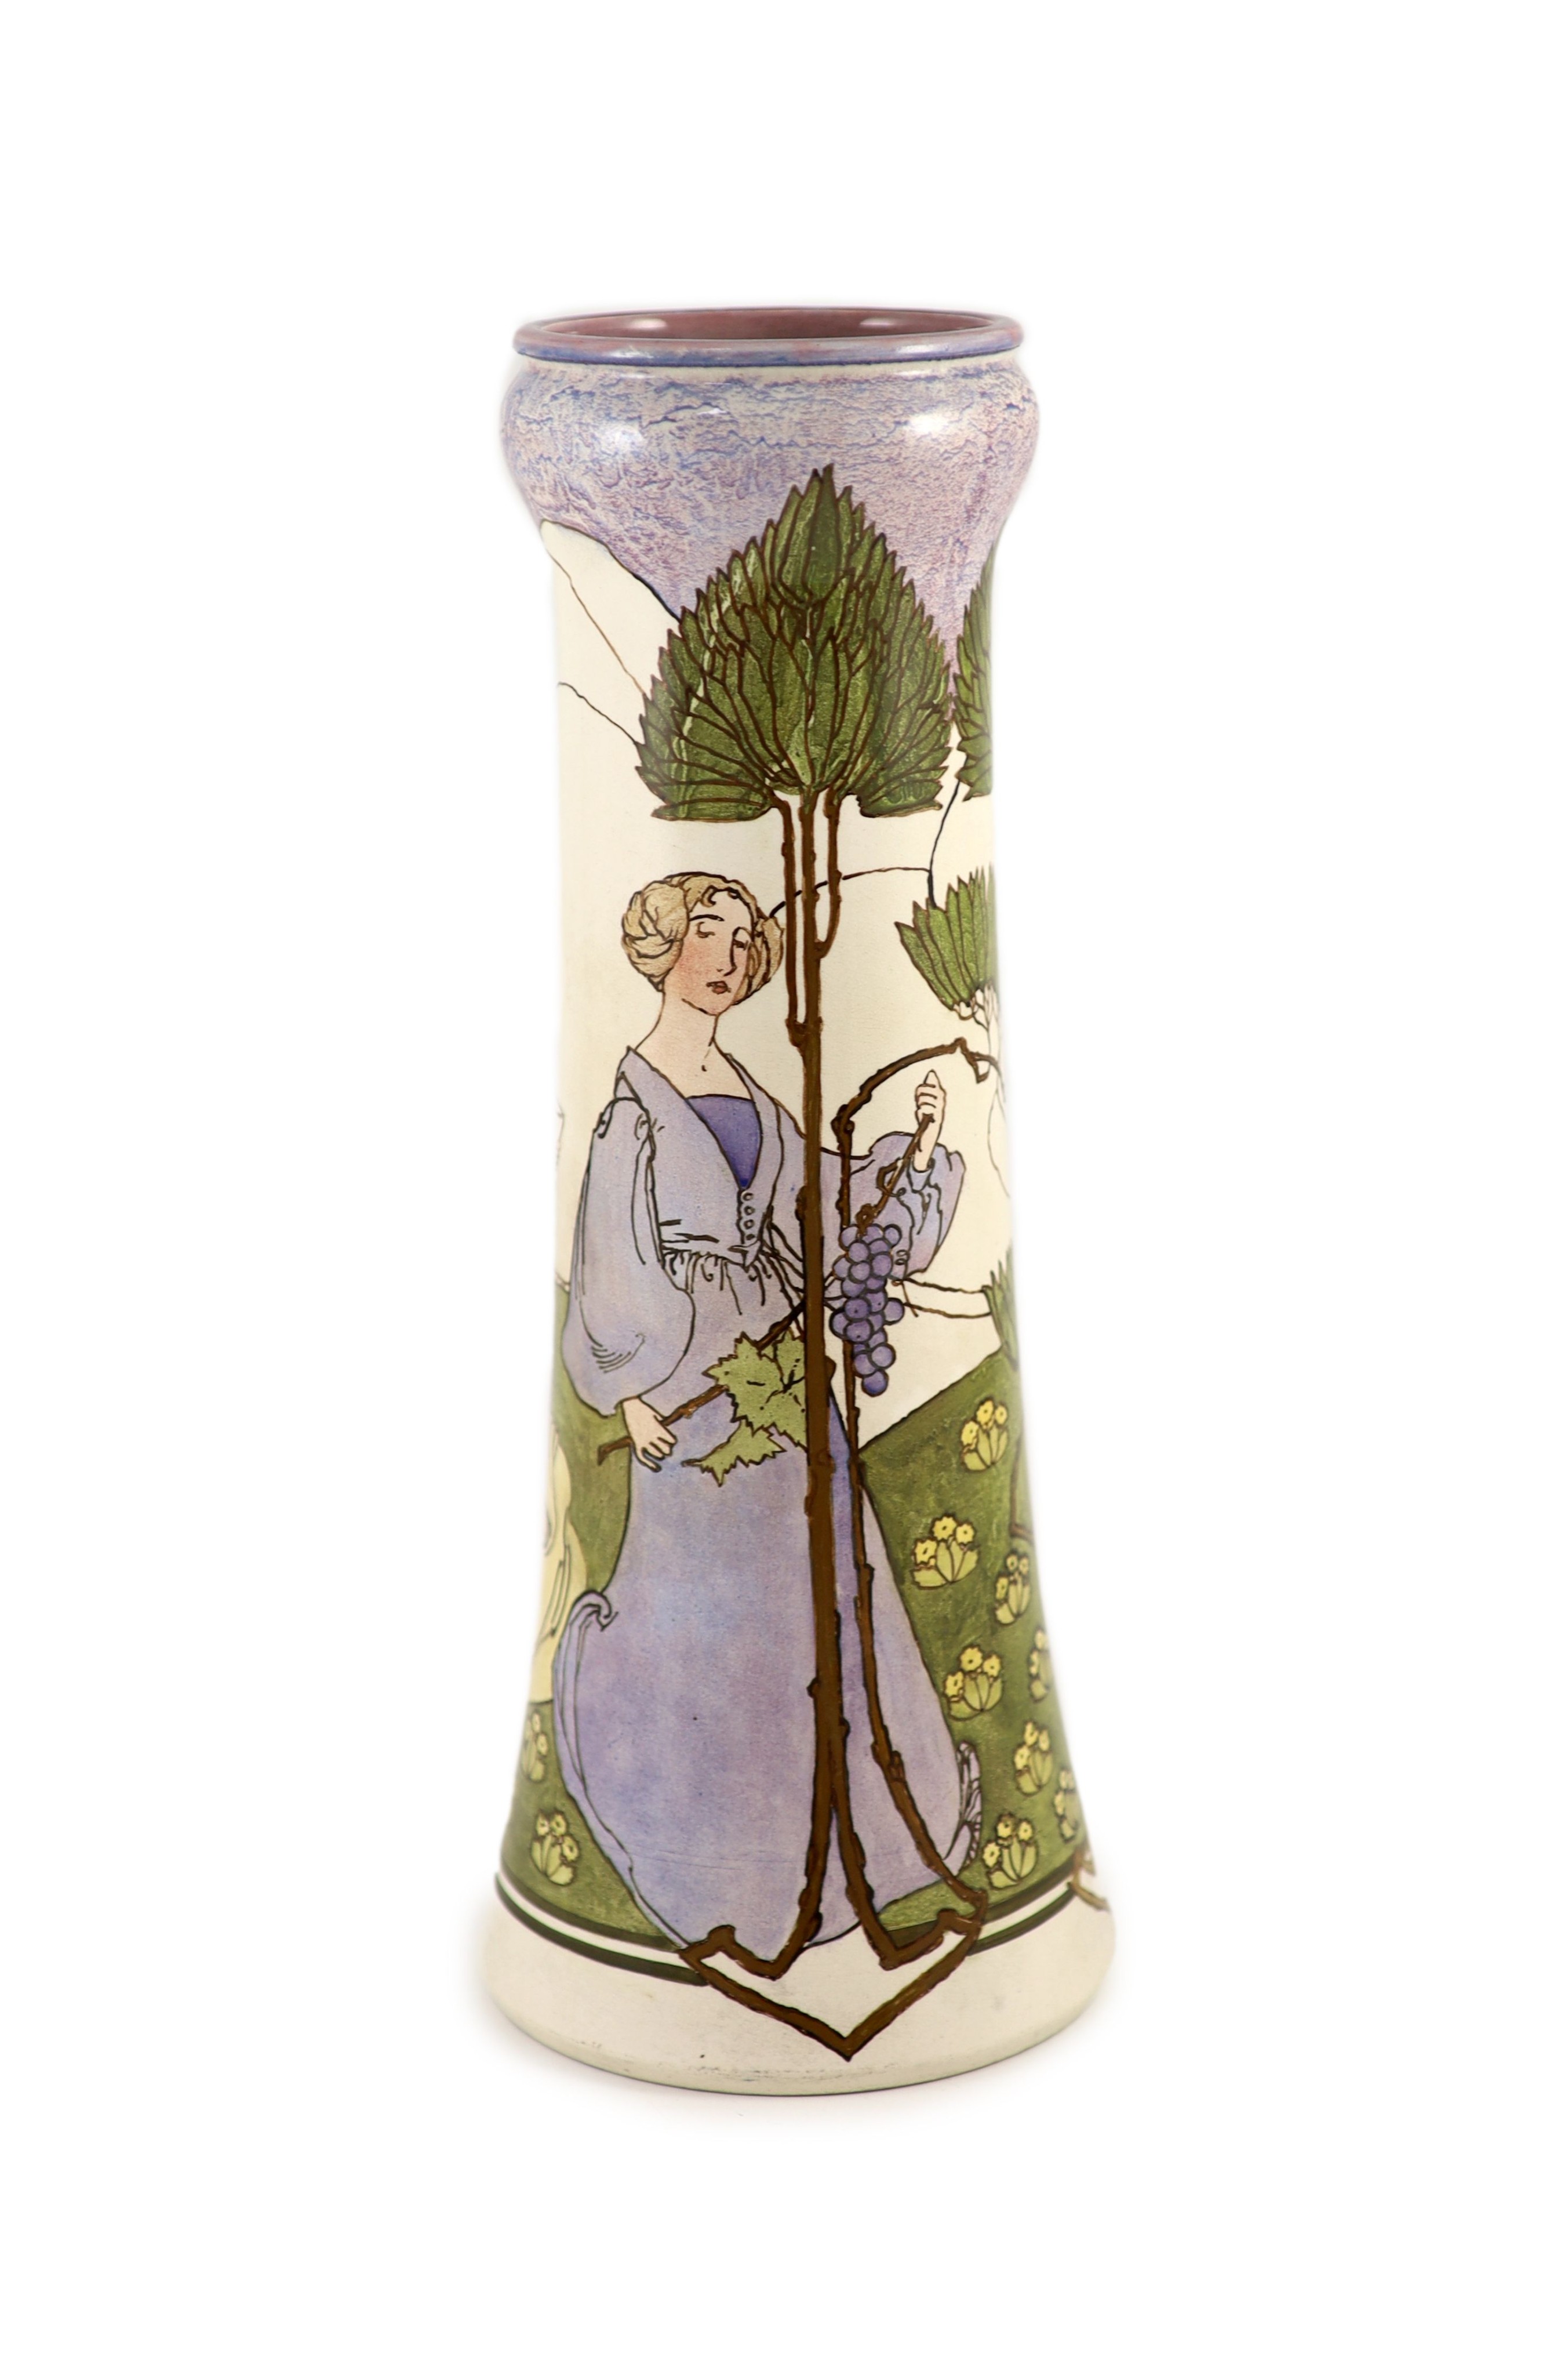 Margaret Thompson for Doulton, Lambeth - an Art Nouveau tall faience vase, c.1900